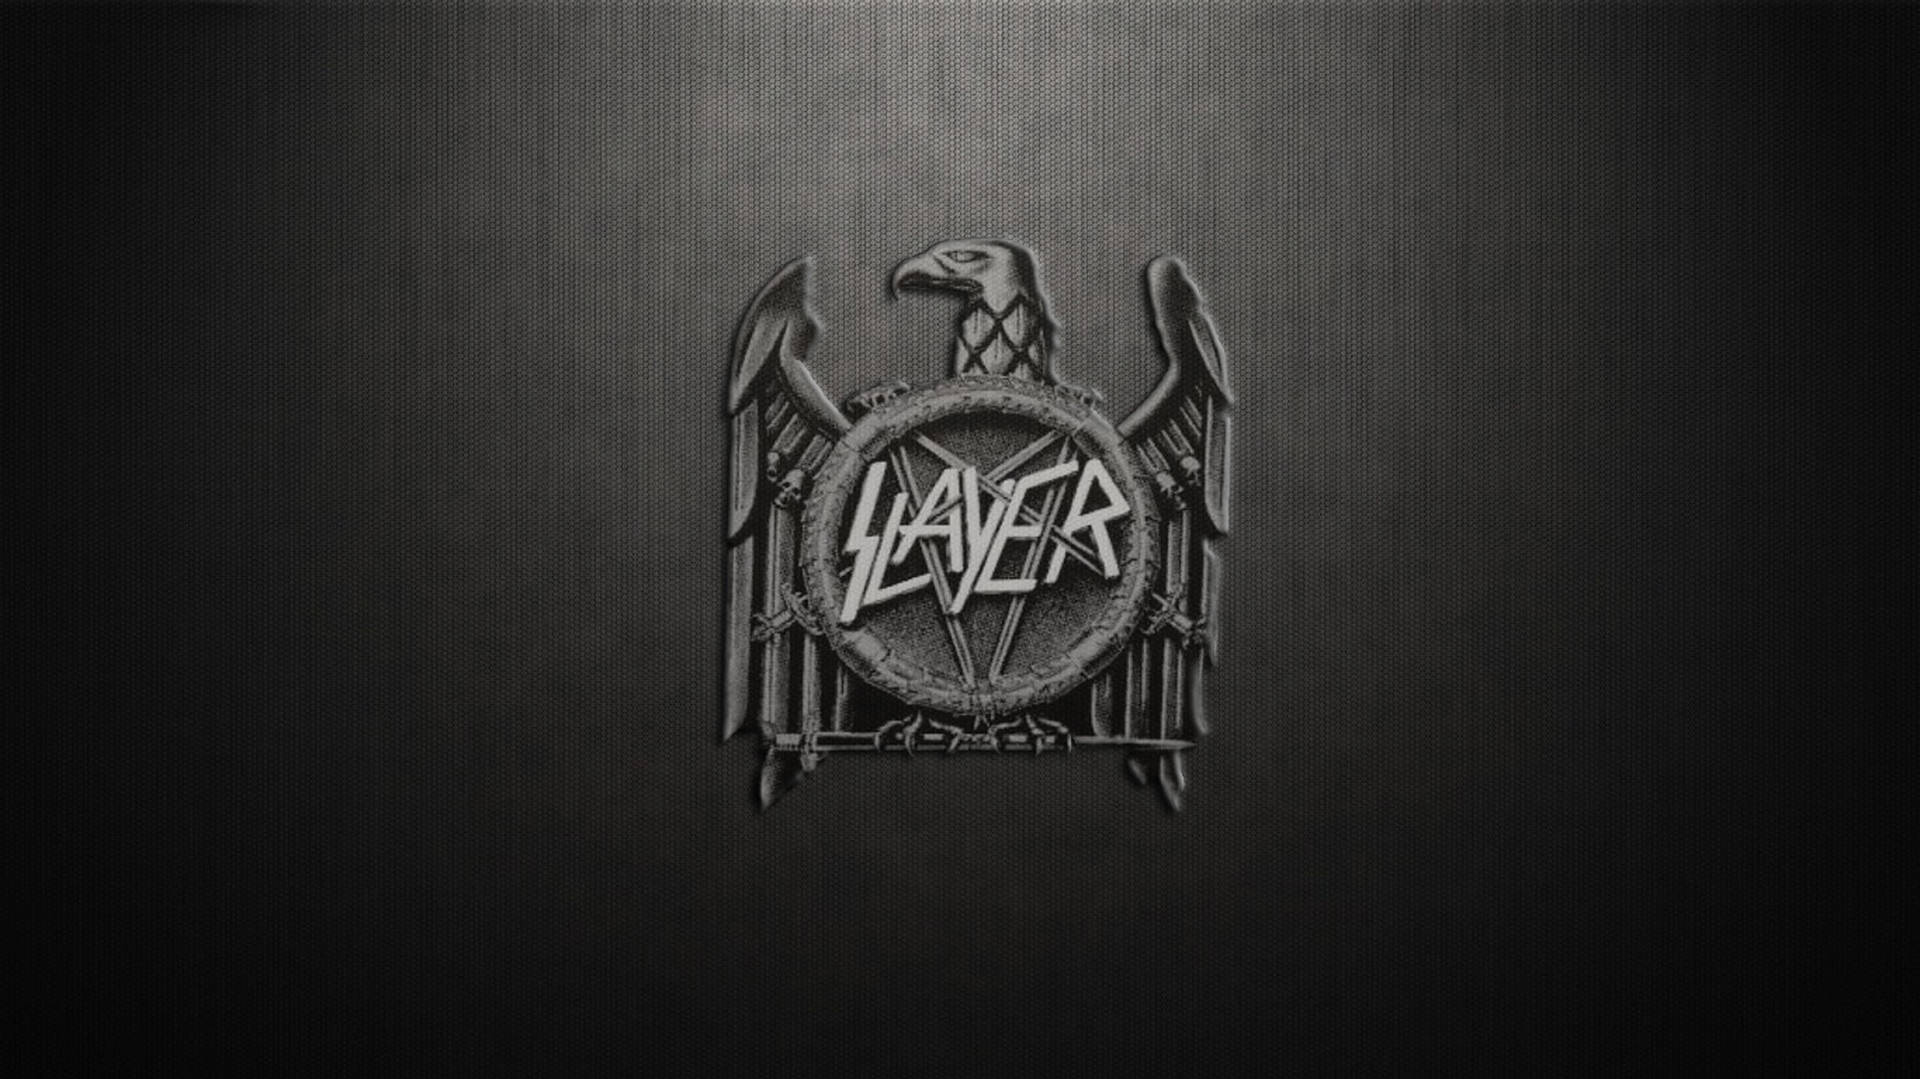 Silver Eagle Slayer Logo Wallpaper